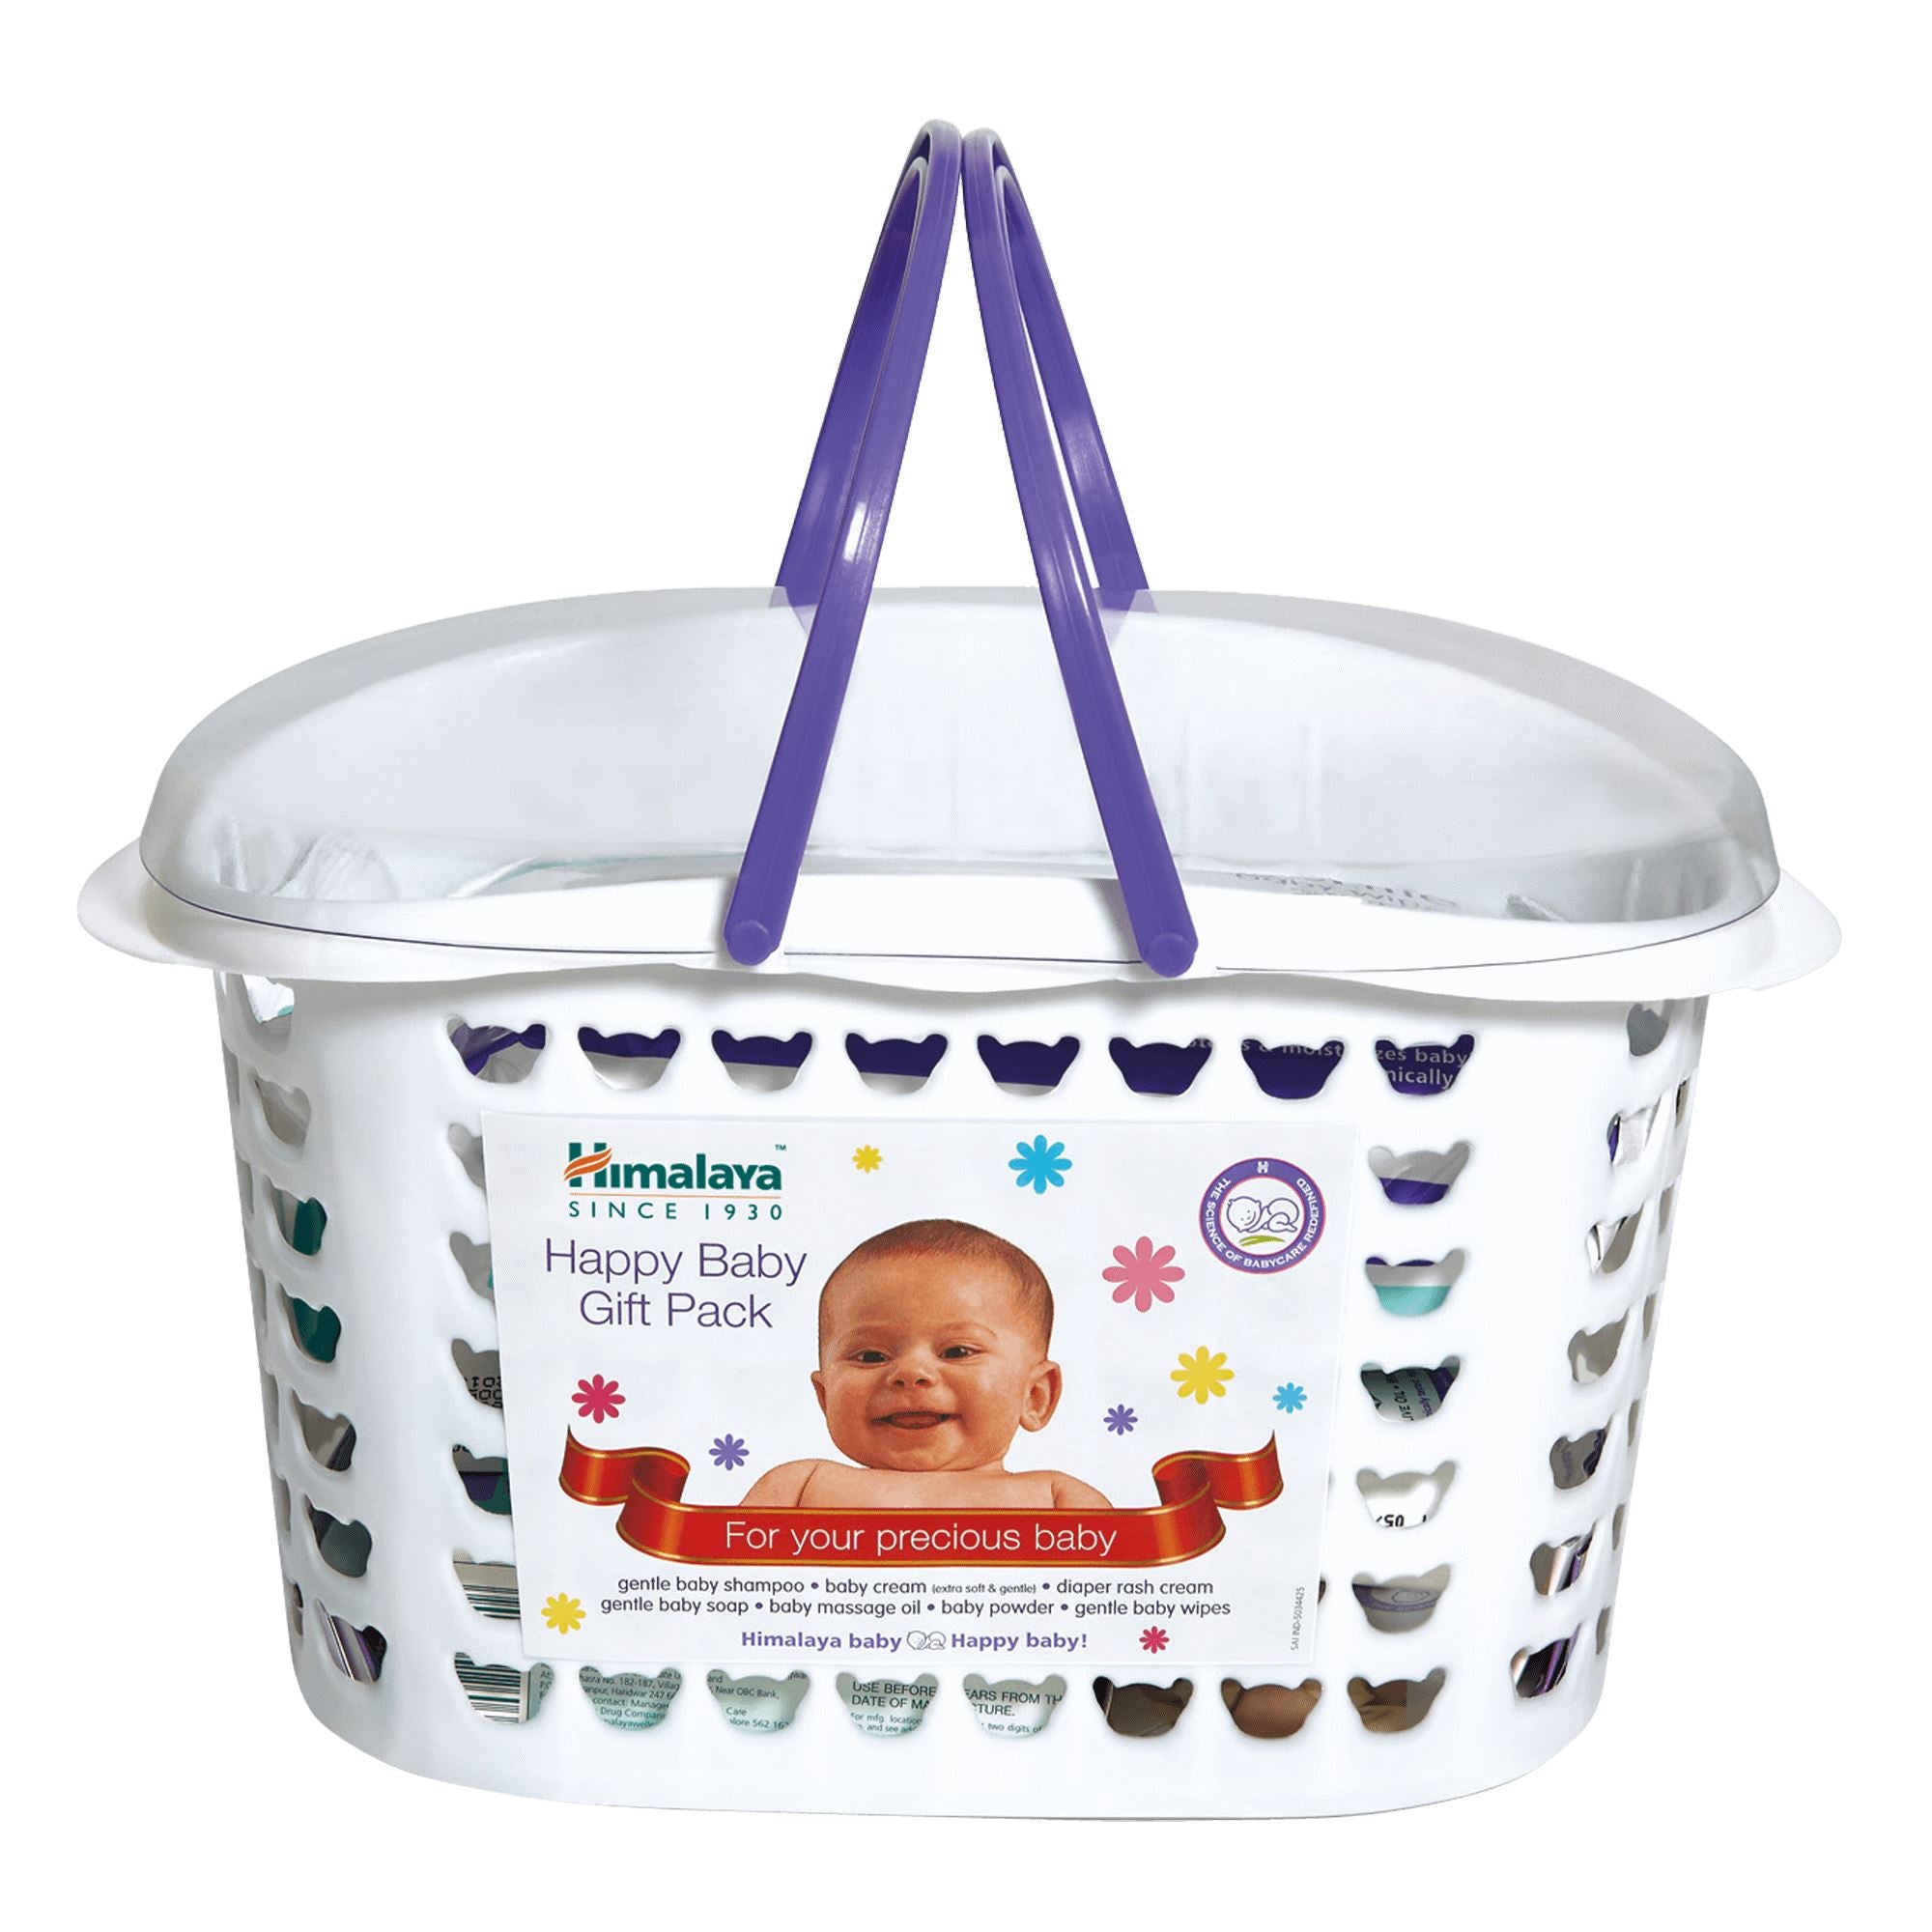 Himalaya Baby Gift Basket 7 in 1 - Cream, oil, powder, rash cream, wipes, shampoo, and soap